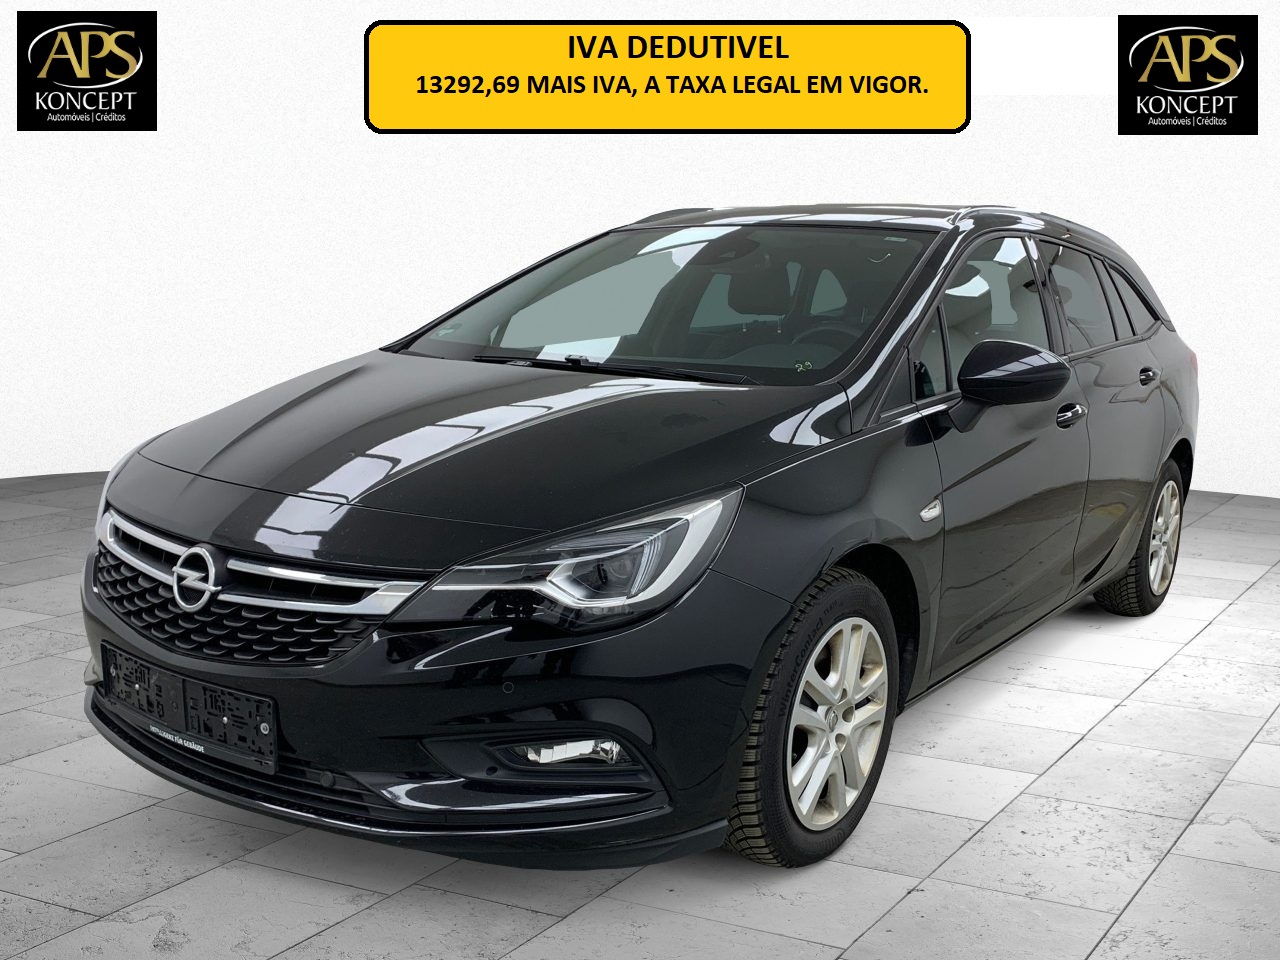 Opel Astra SportsTourer 1.6 CDTI - 2018 - 16.350€ - IVA DEDUTIVEL